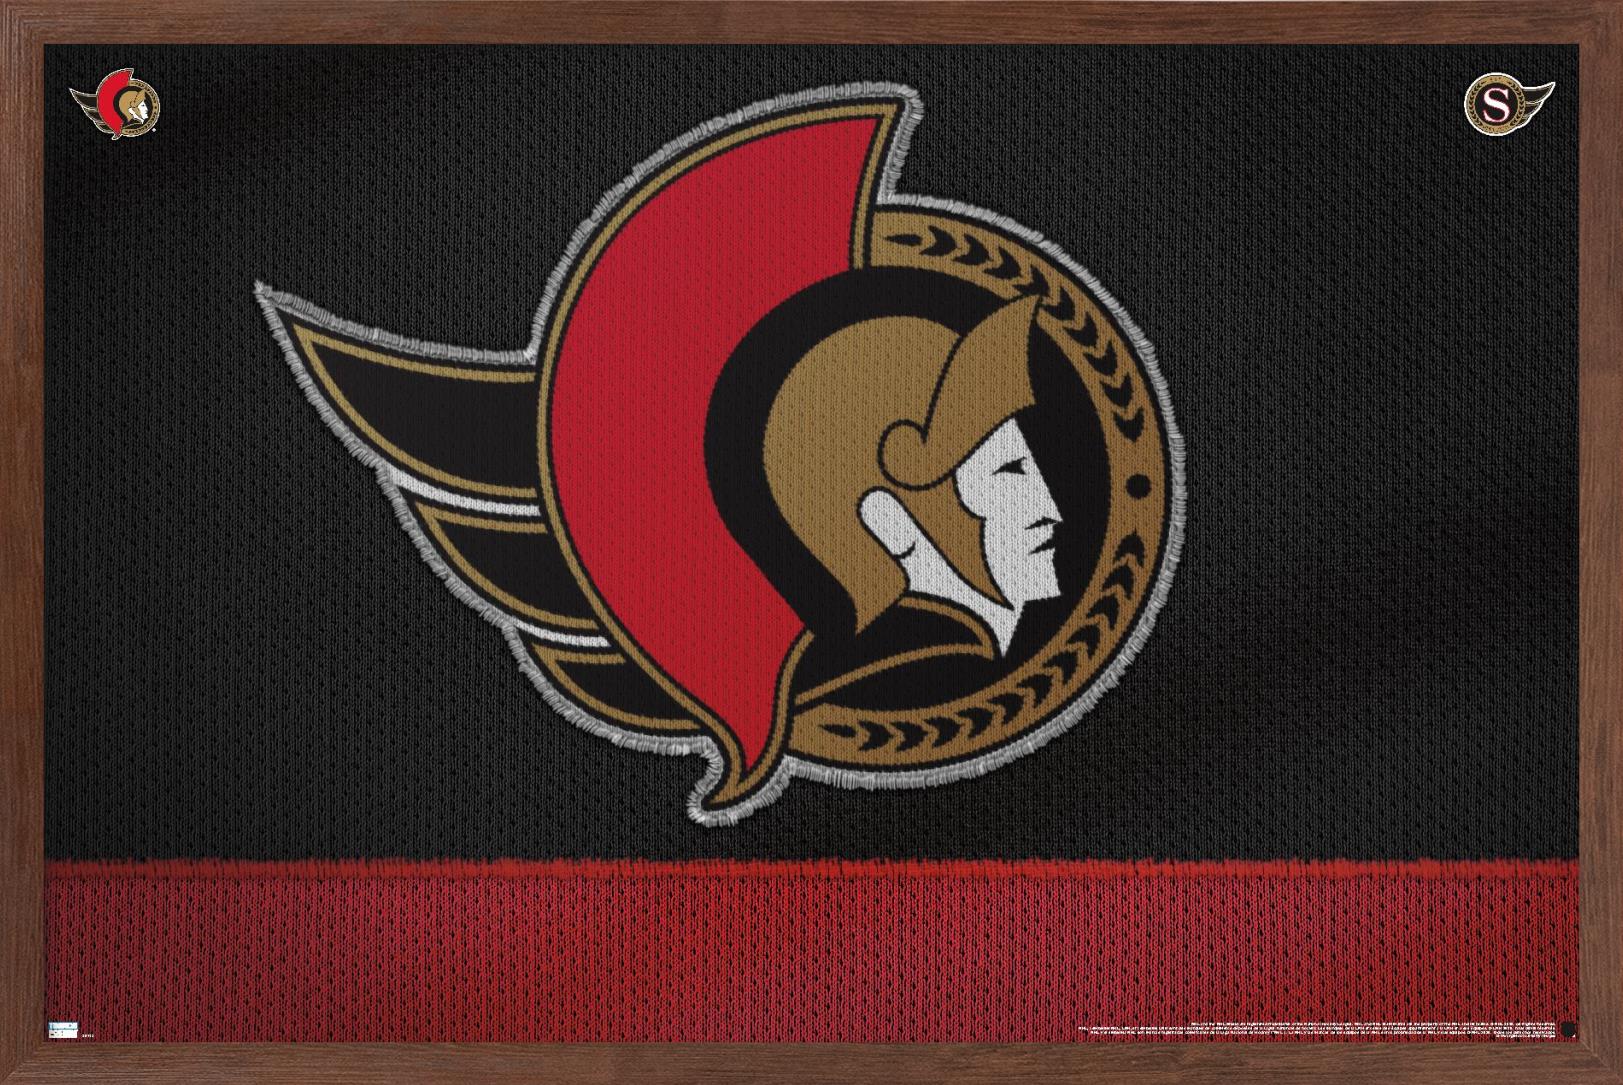 NHL Ottawa Senators - Logo 20 Wall Poster, 14.725" x 22.375", Framed - image 1 of 5